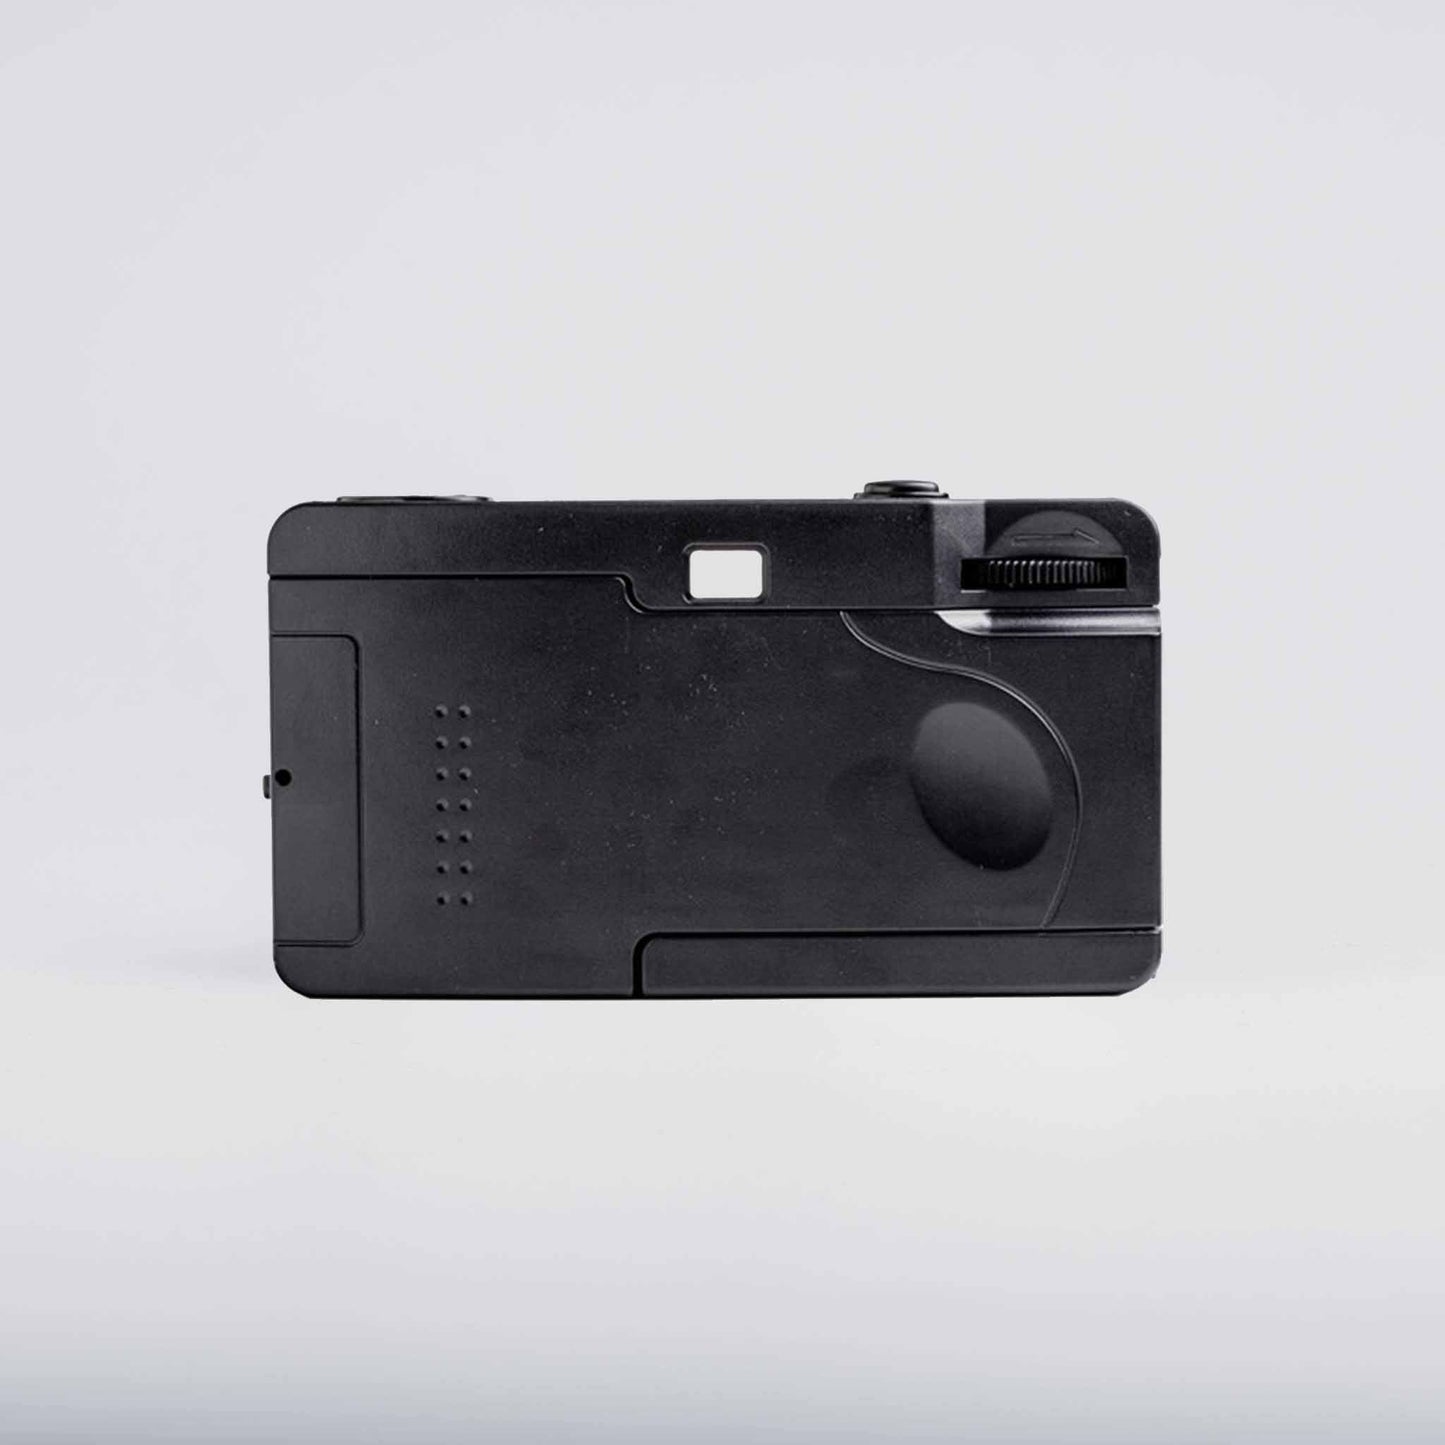 Kodak M38 Film Camera with Flash - Starry Black - Camera Kangaroo